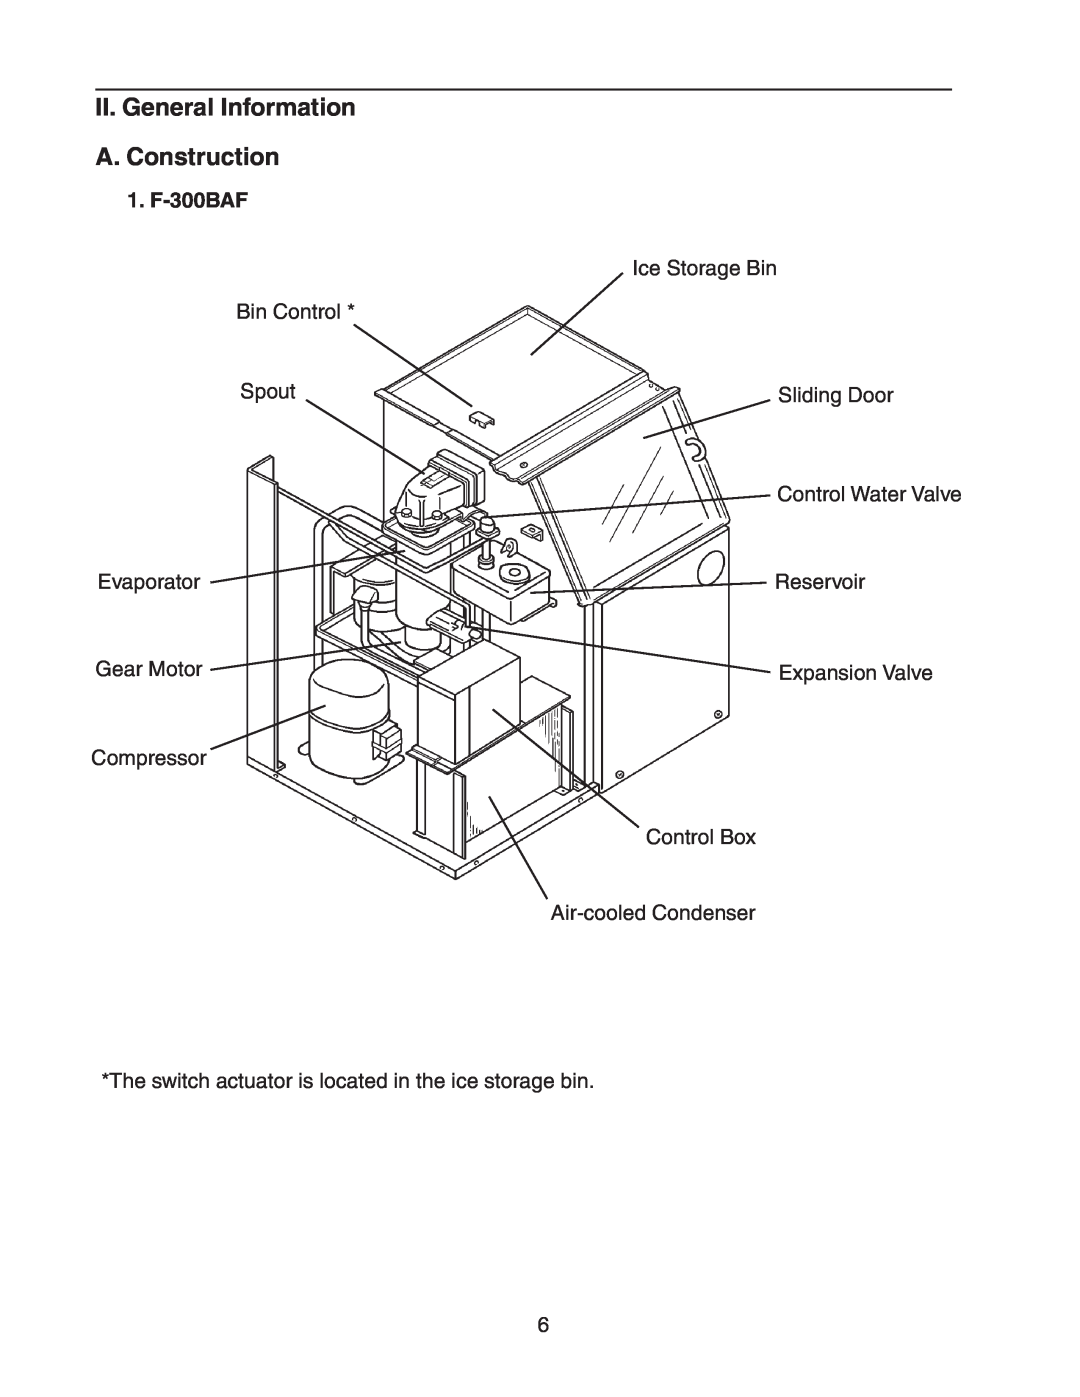 Hoshizaki II. General Information A. Construction, 1. F-300BAF, Bin Control Spout Evaporator Gear Motor Compressor 